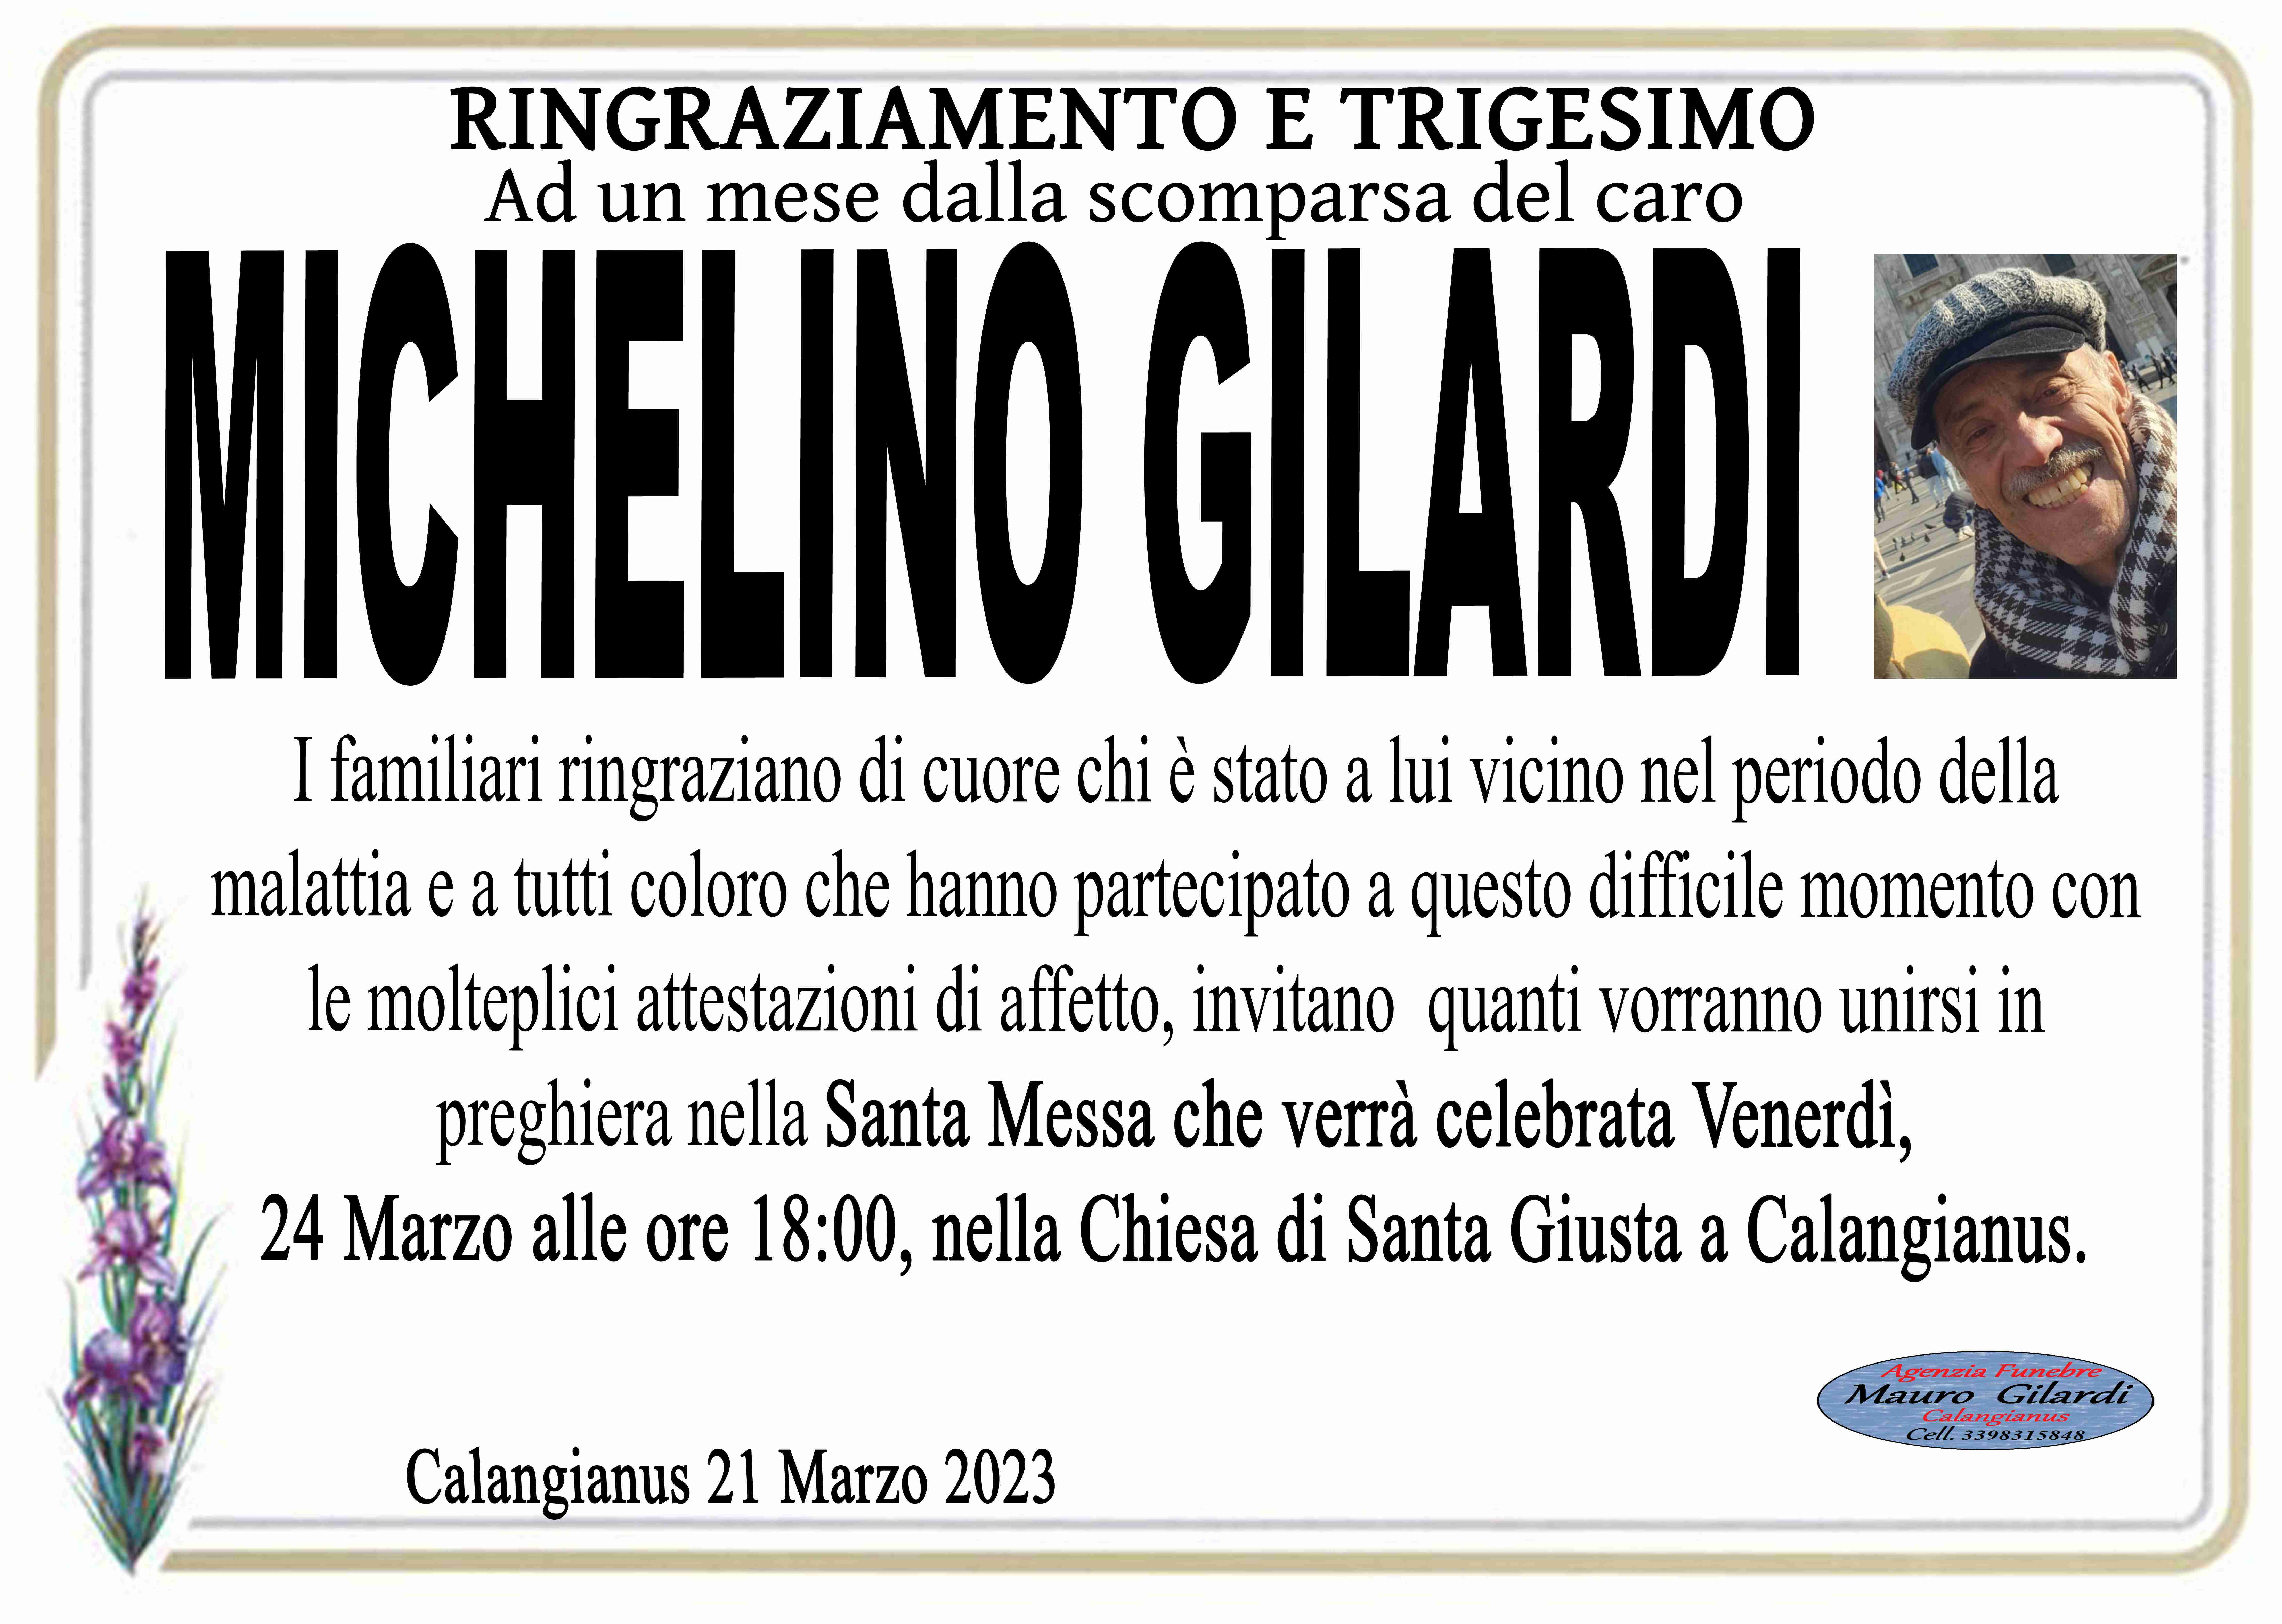 Michelino Gilardi